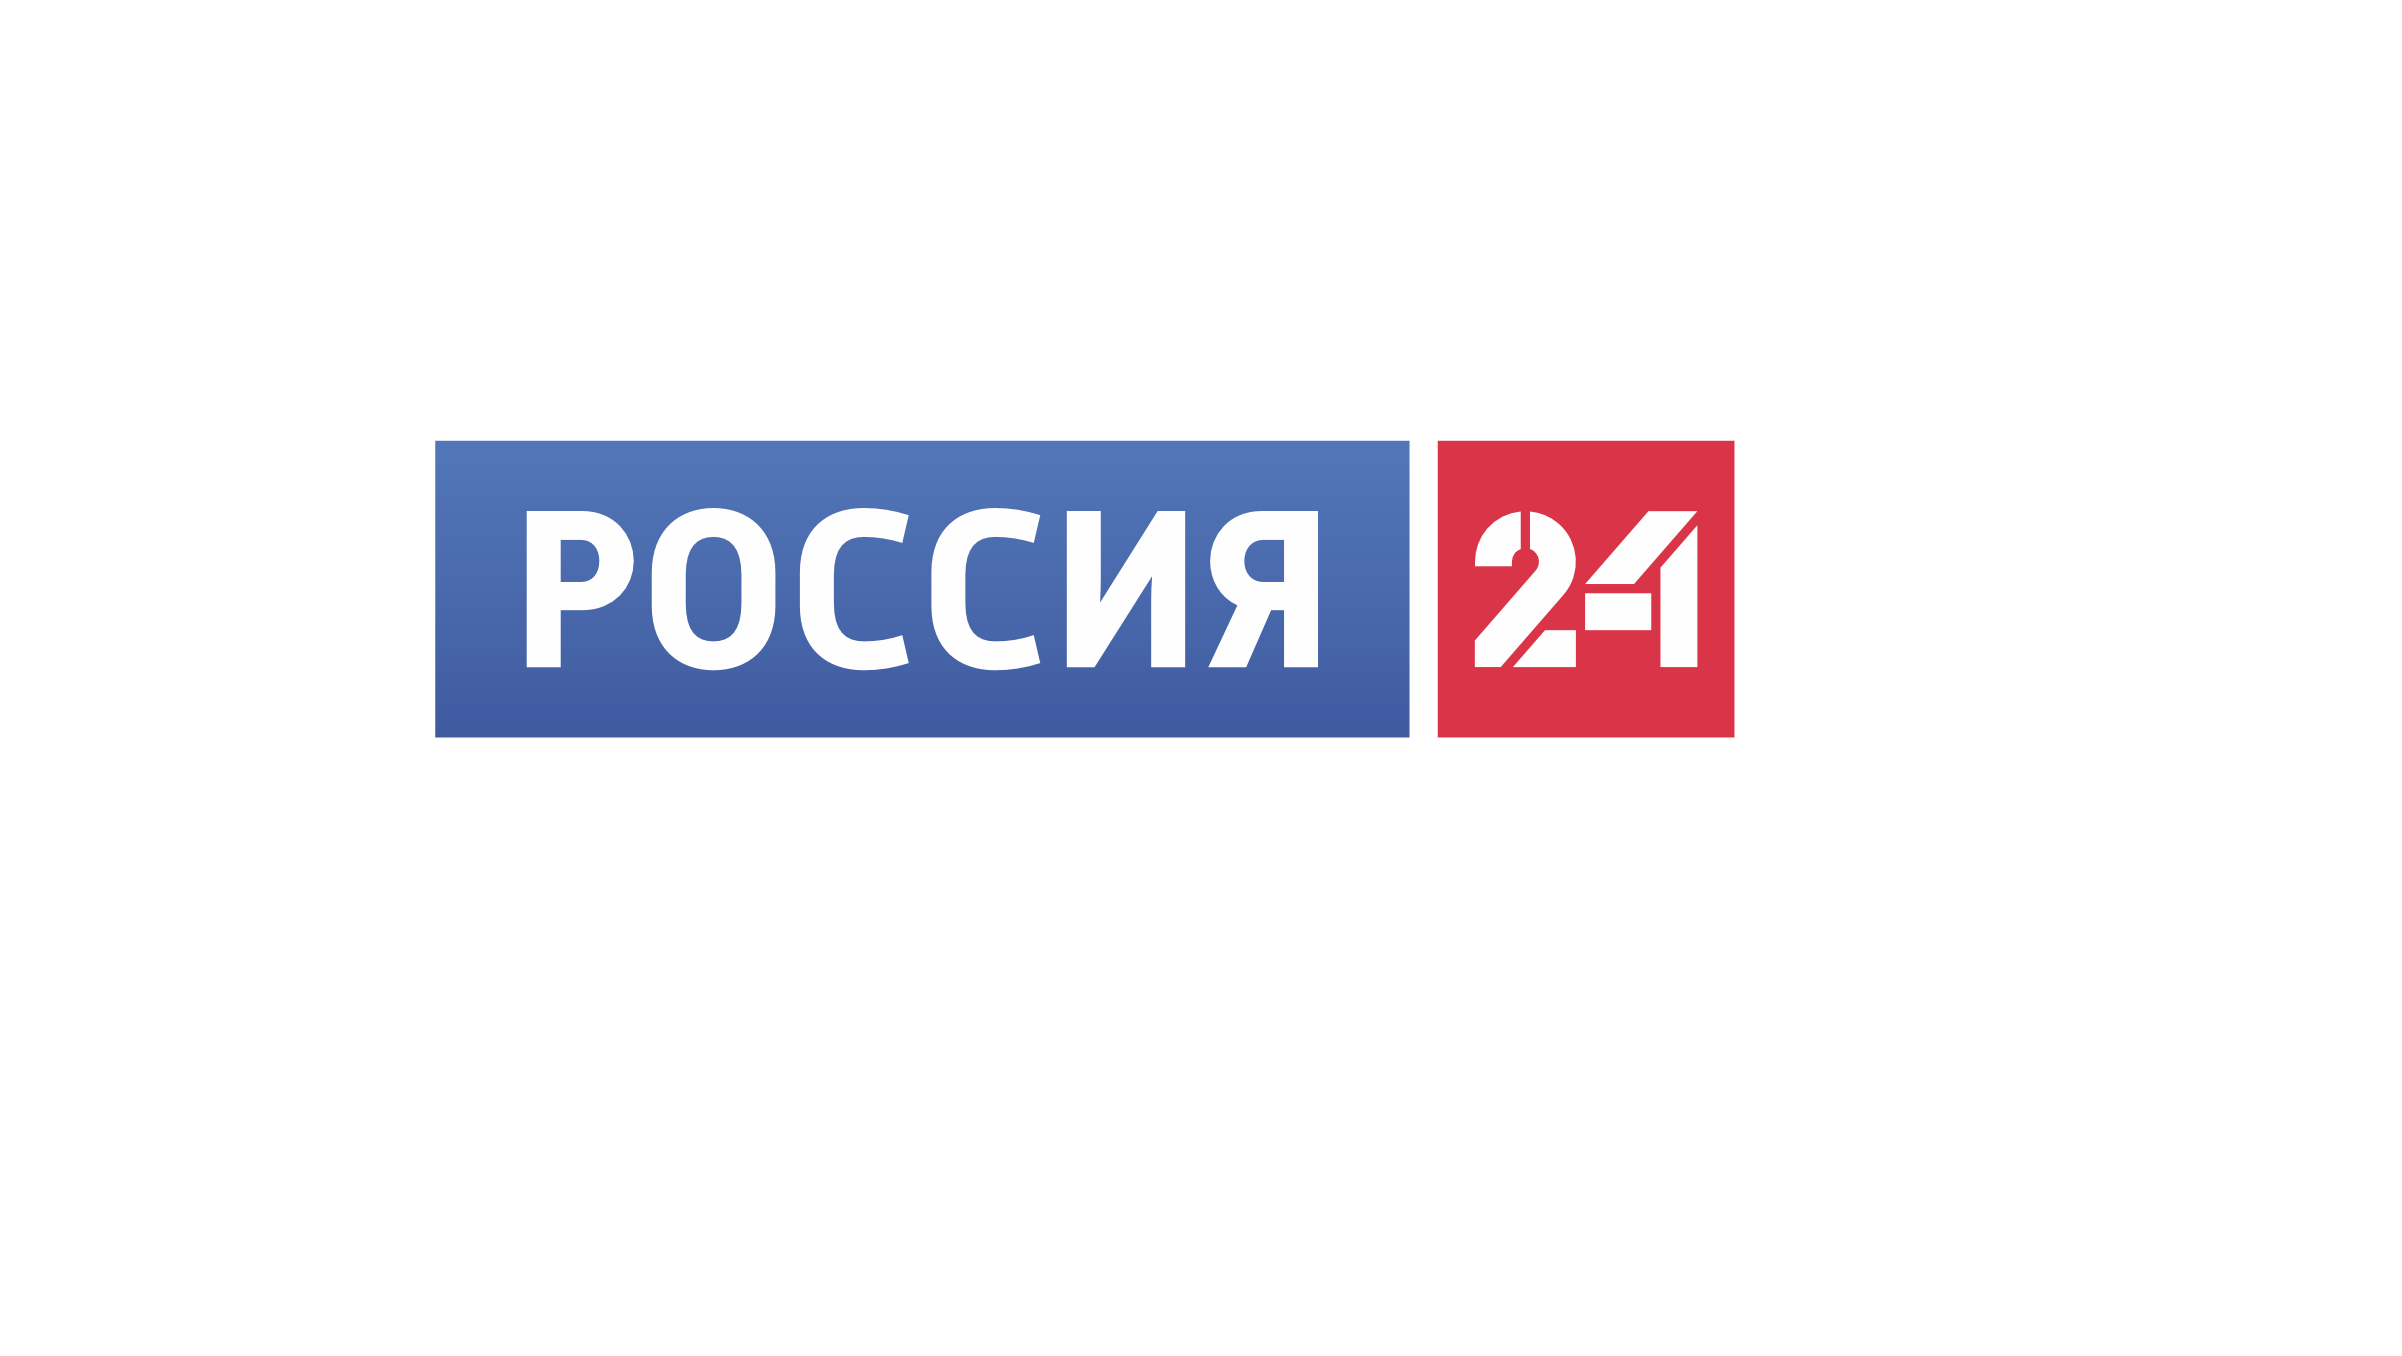 Вести24 Урал